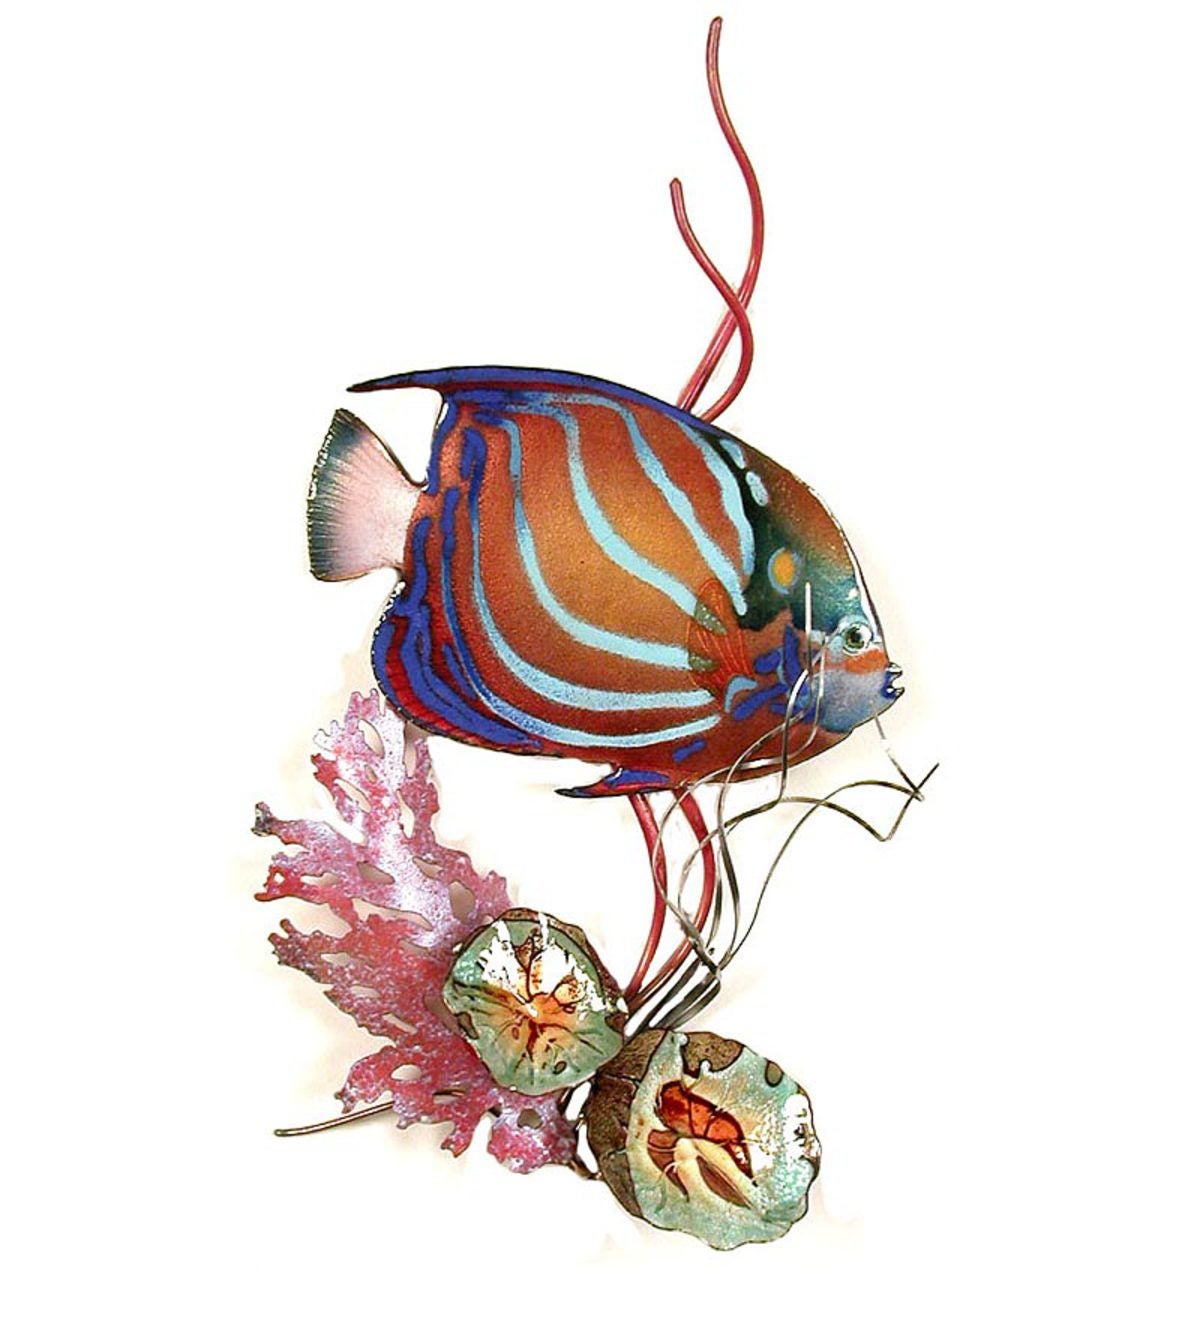 Annularis Angelfish stock image. Image of body, tropical - 83662375